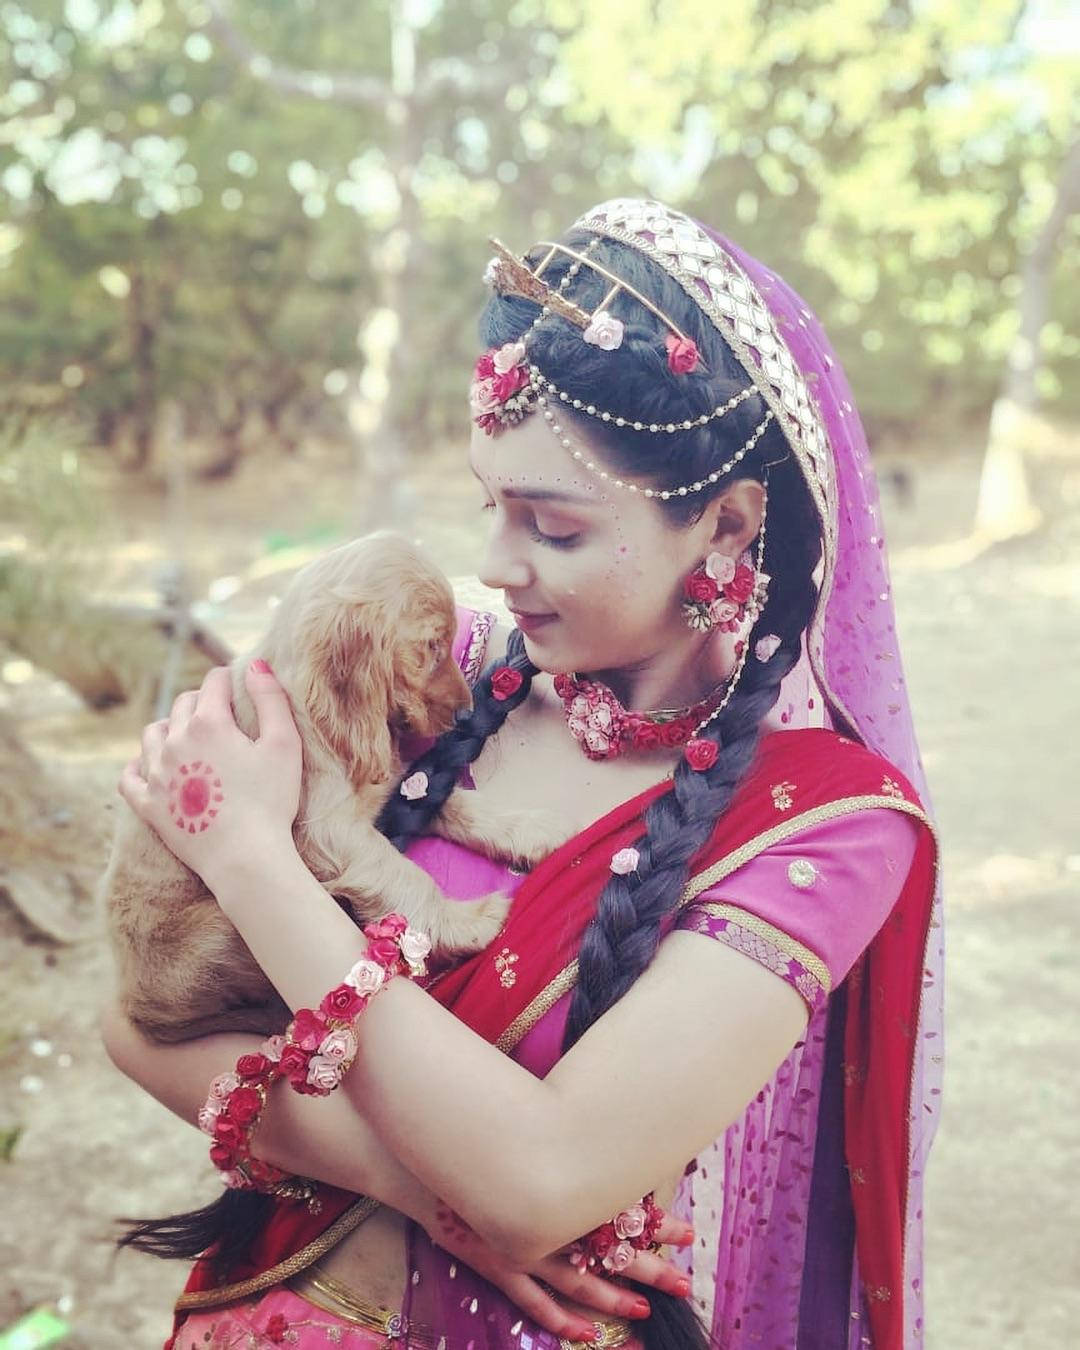 Mallika Singh Holding Dog